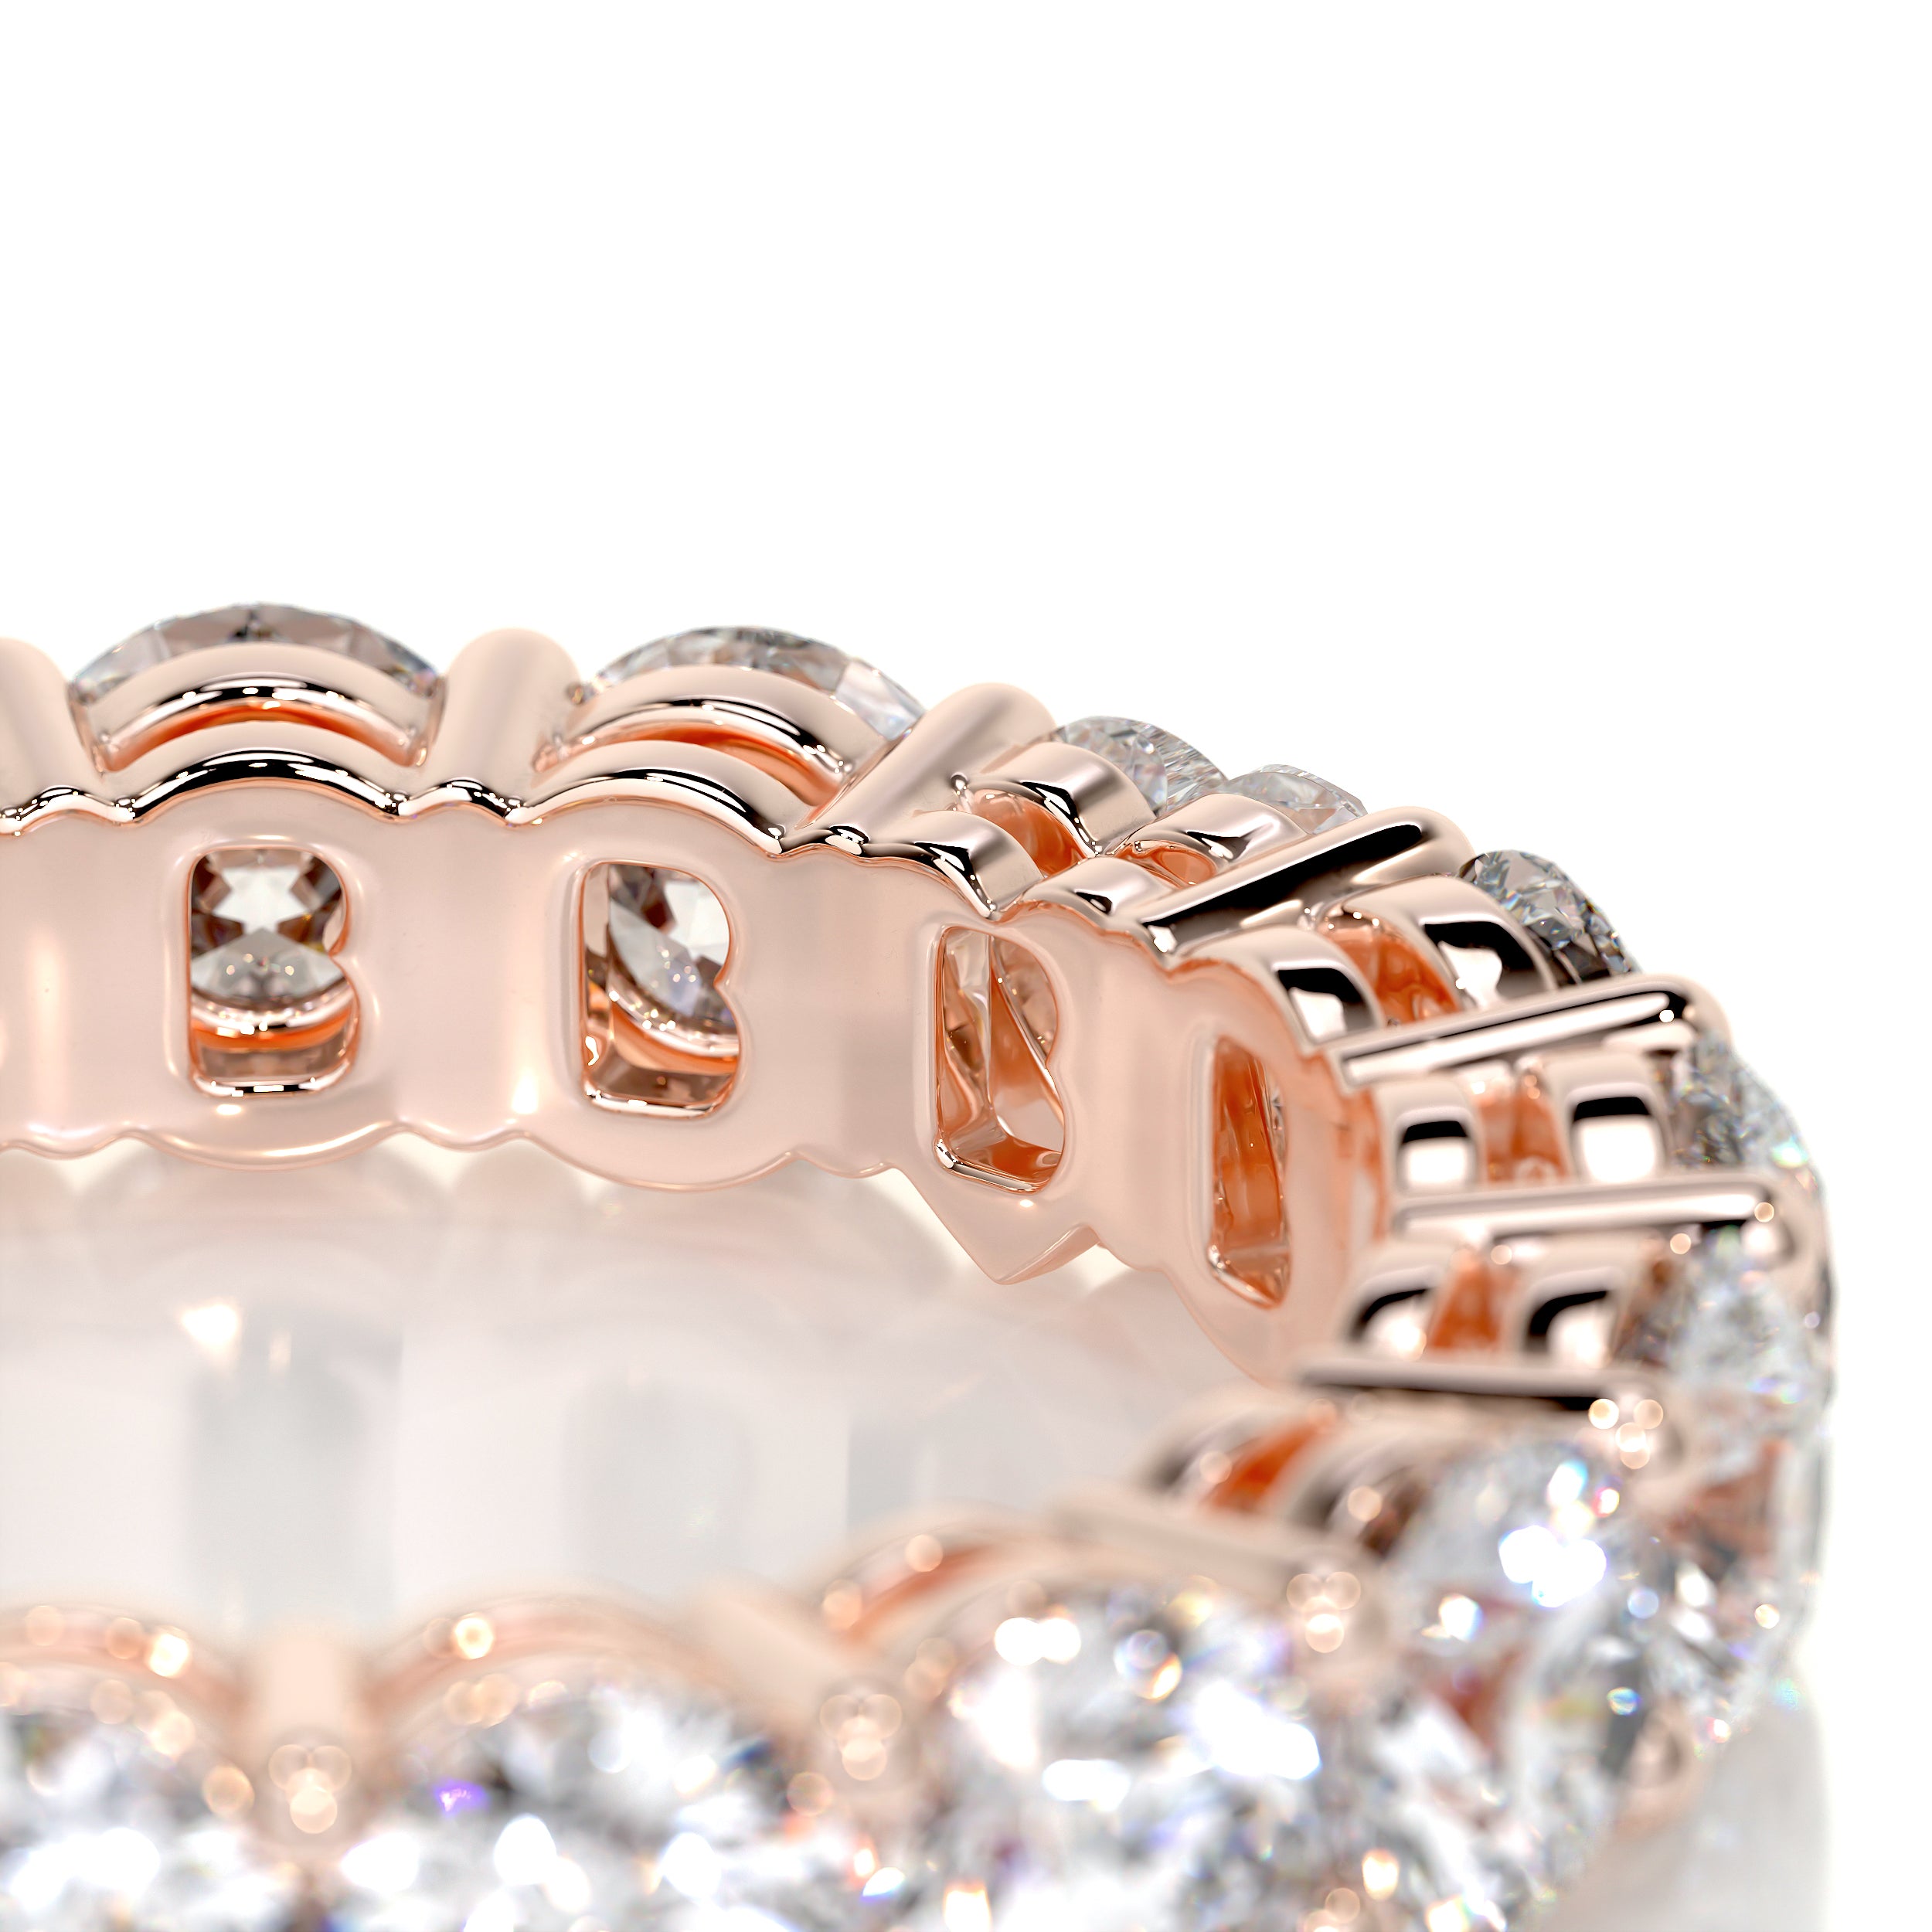 Anne Diamond Wedding Ring -14K Rose Gold